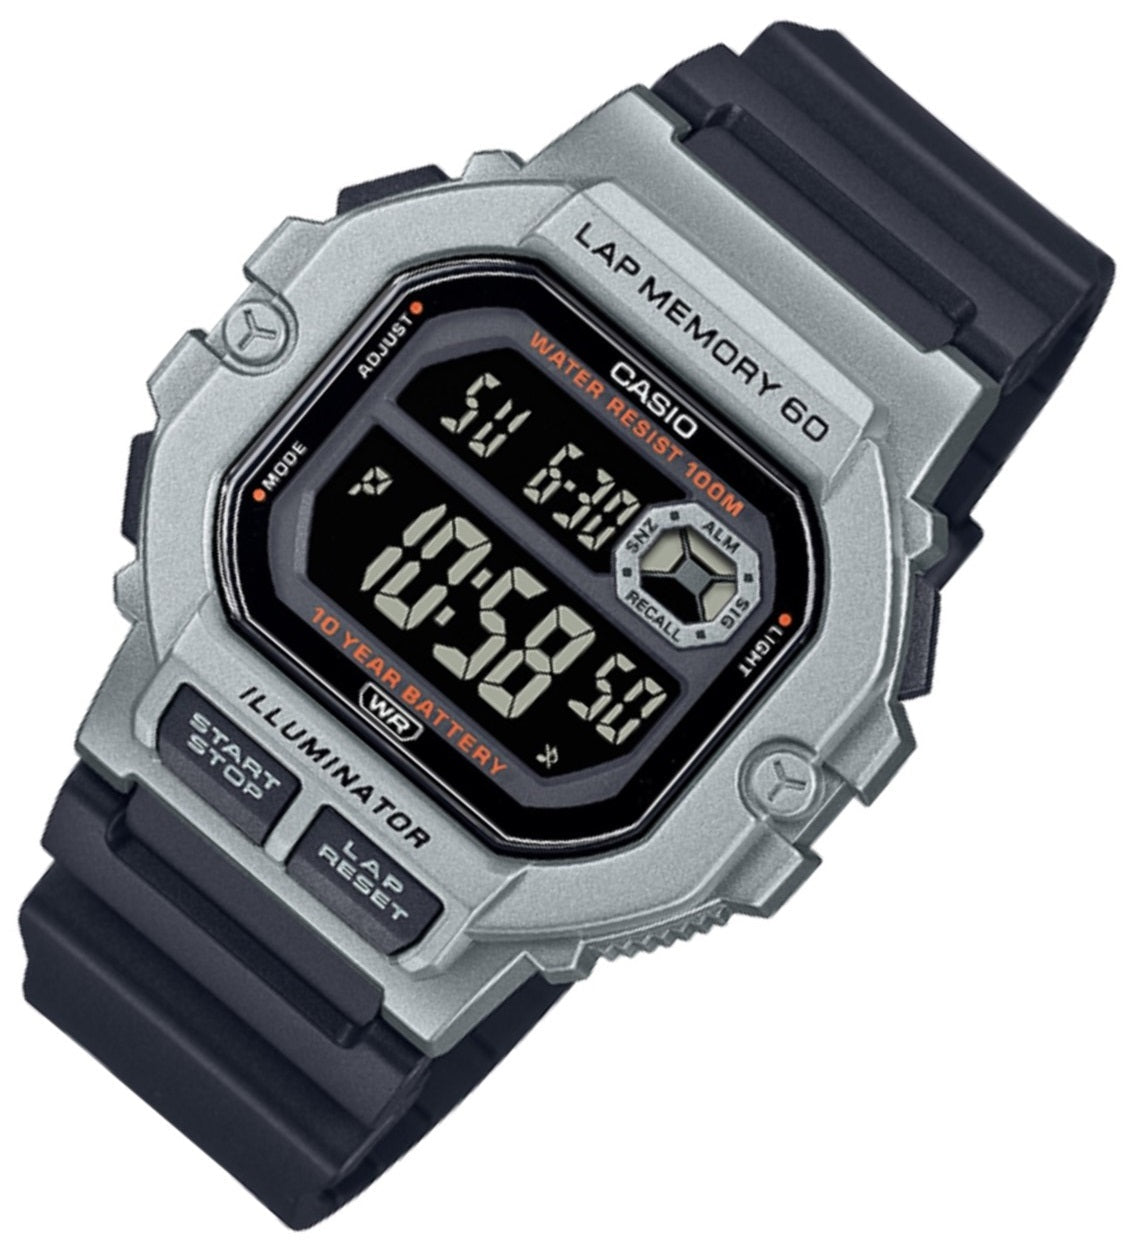 Casio WS-1400H-1B Black Resin Strap Watch for Men-Watch Portal Philippines